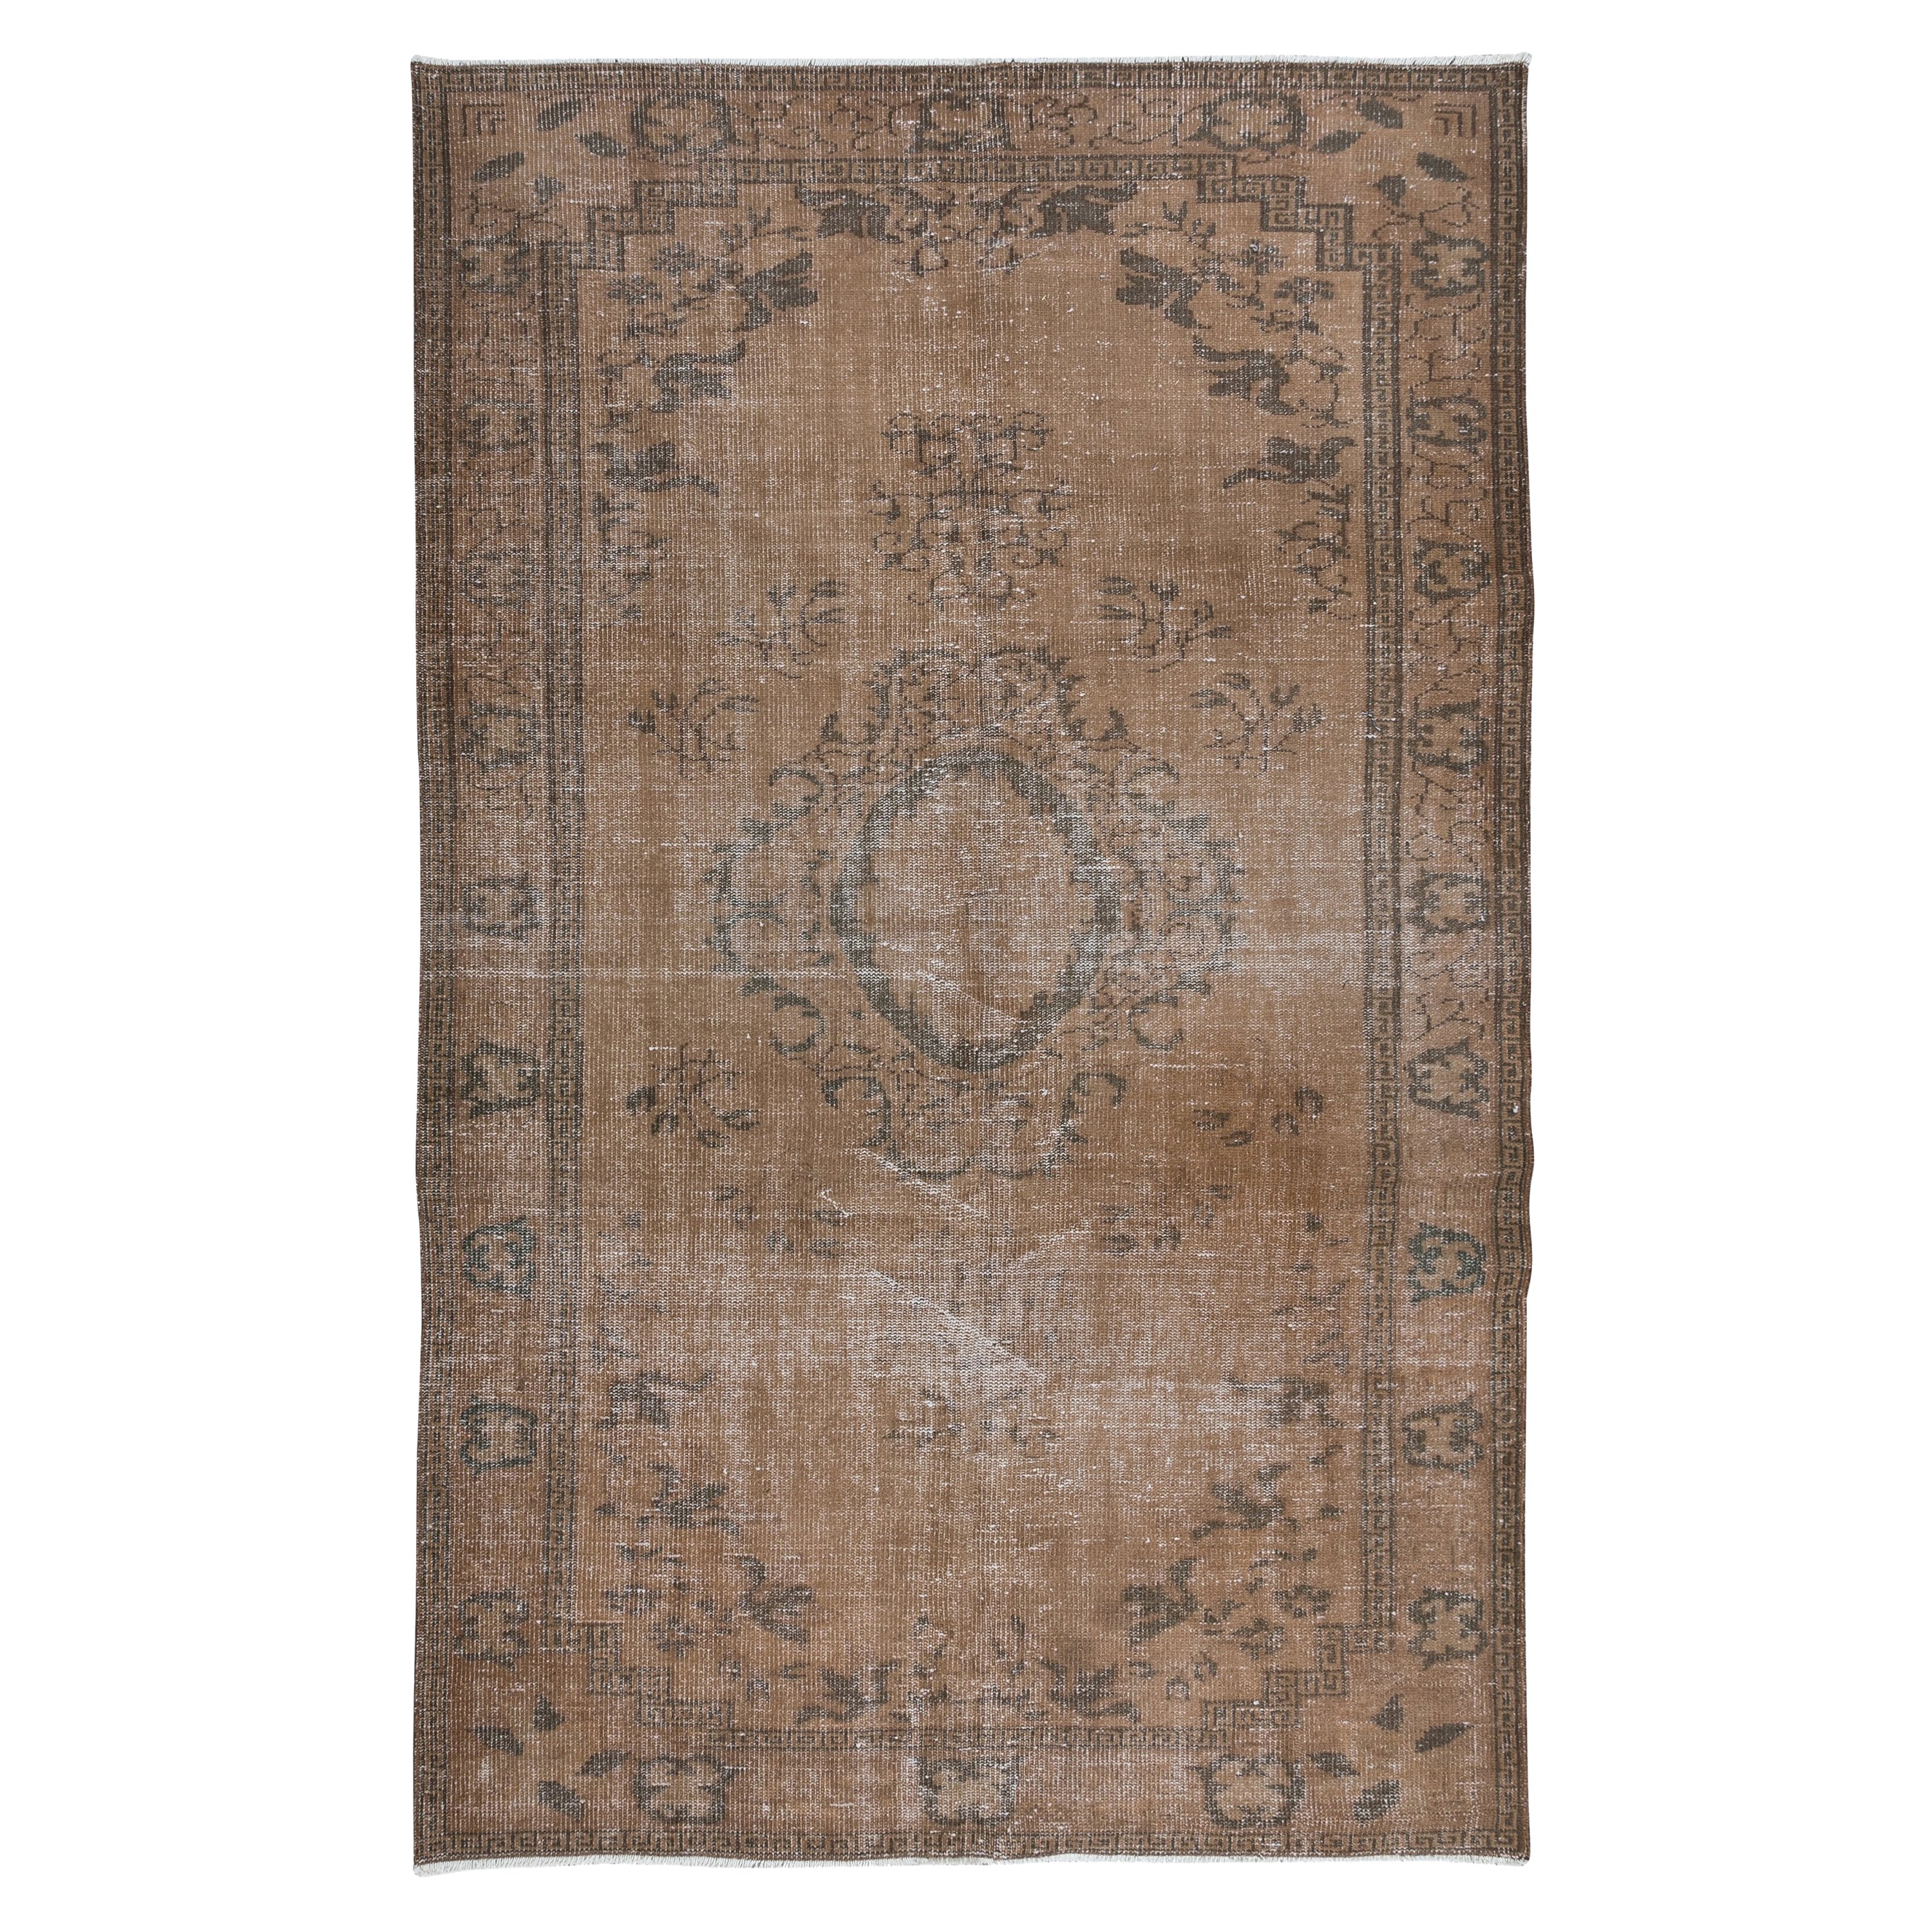 5.8x9 Ft Modern Brown Handmade Area Rug, Contemporary Turkish Wool Carpet im Angebot